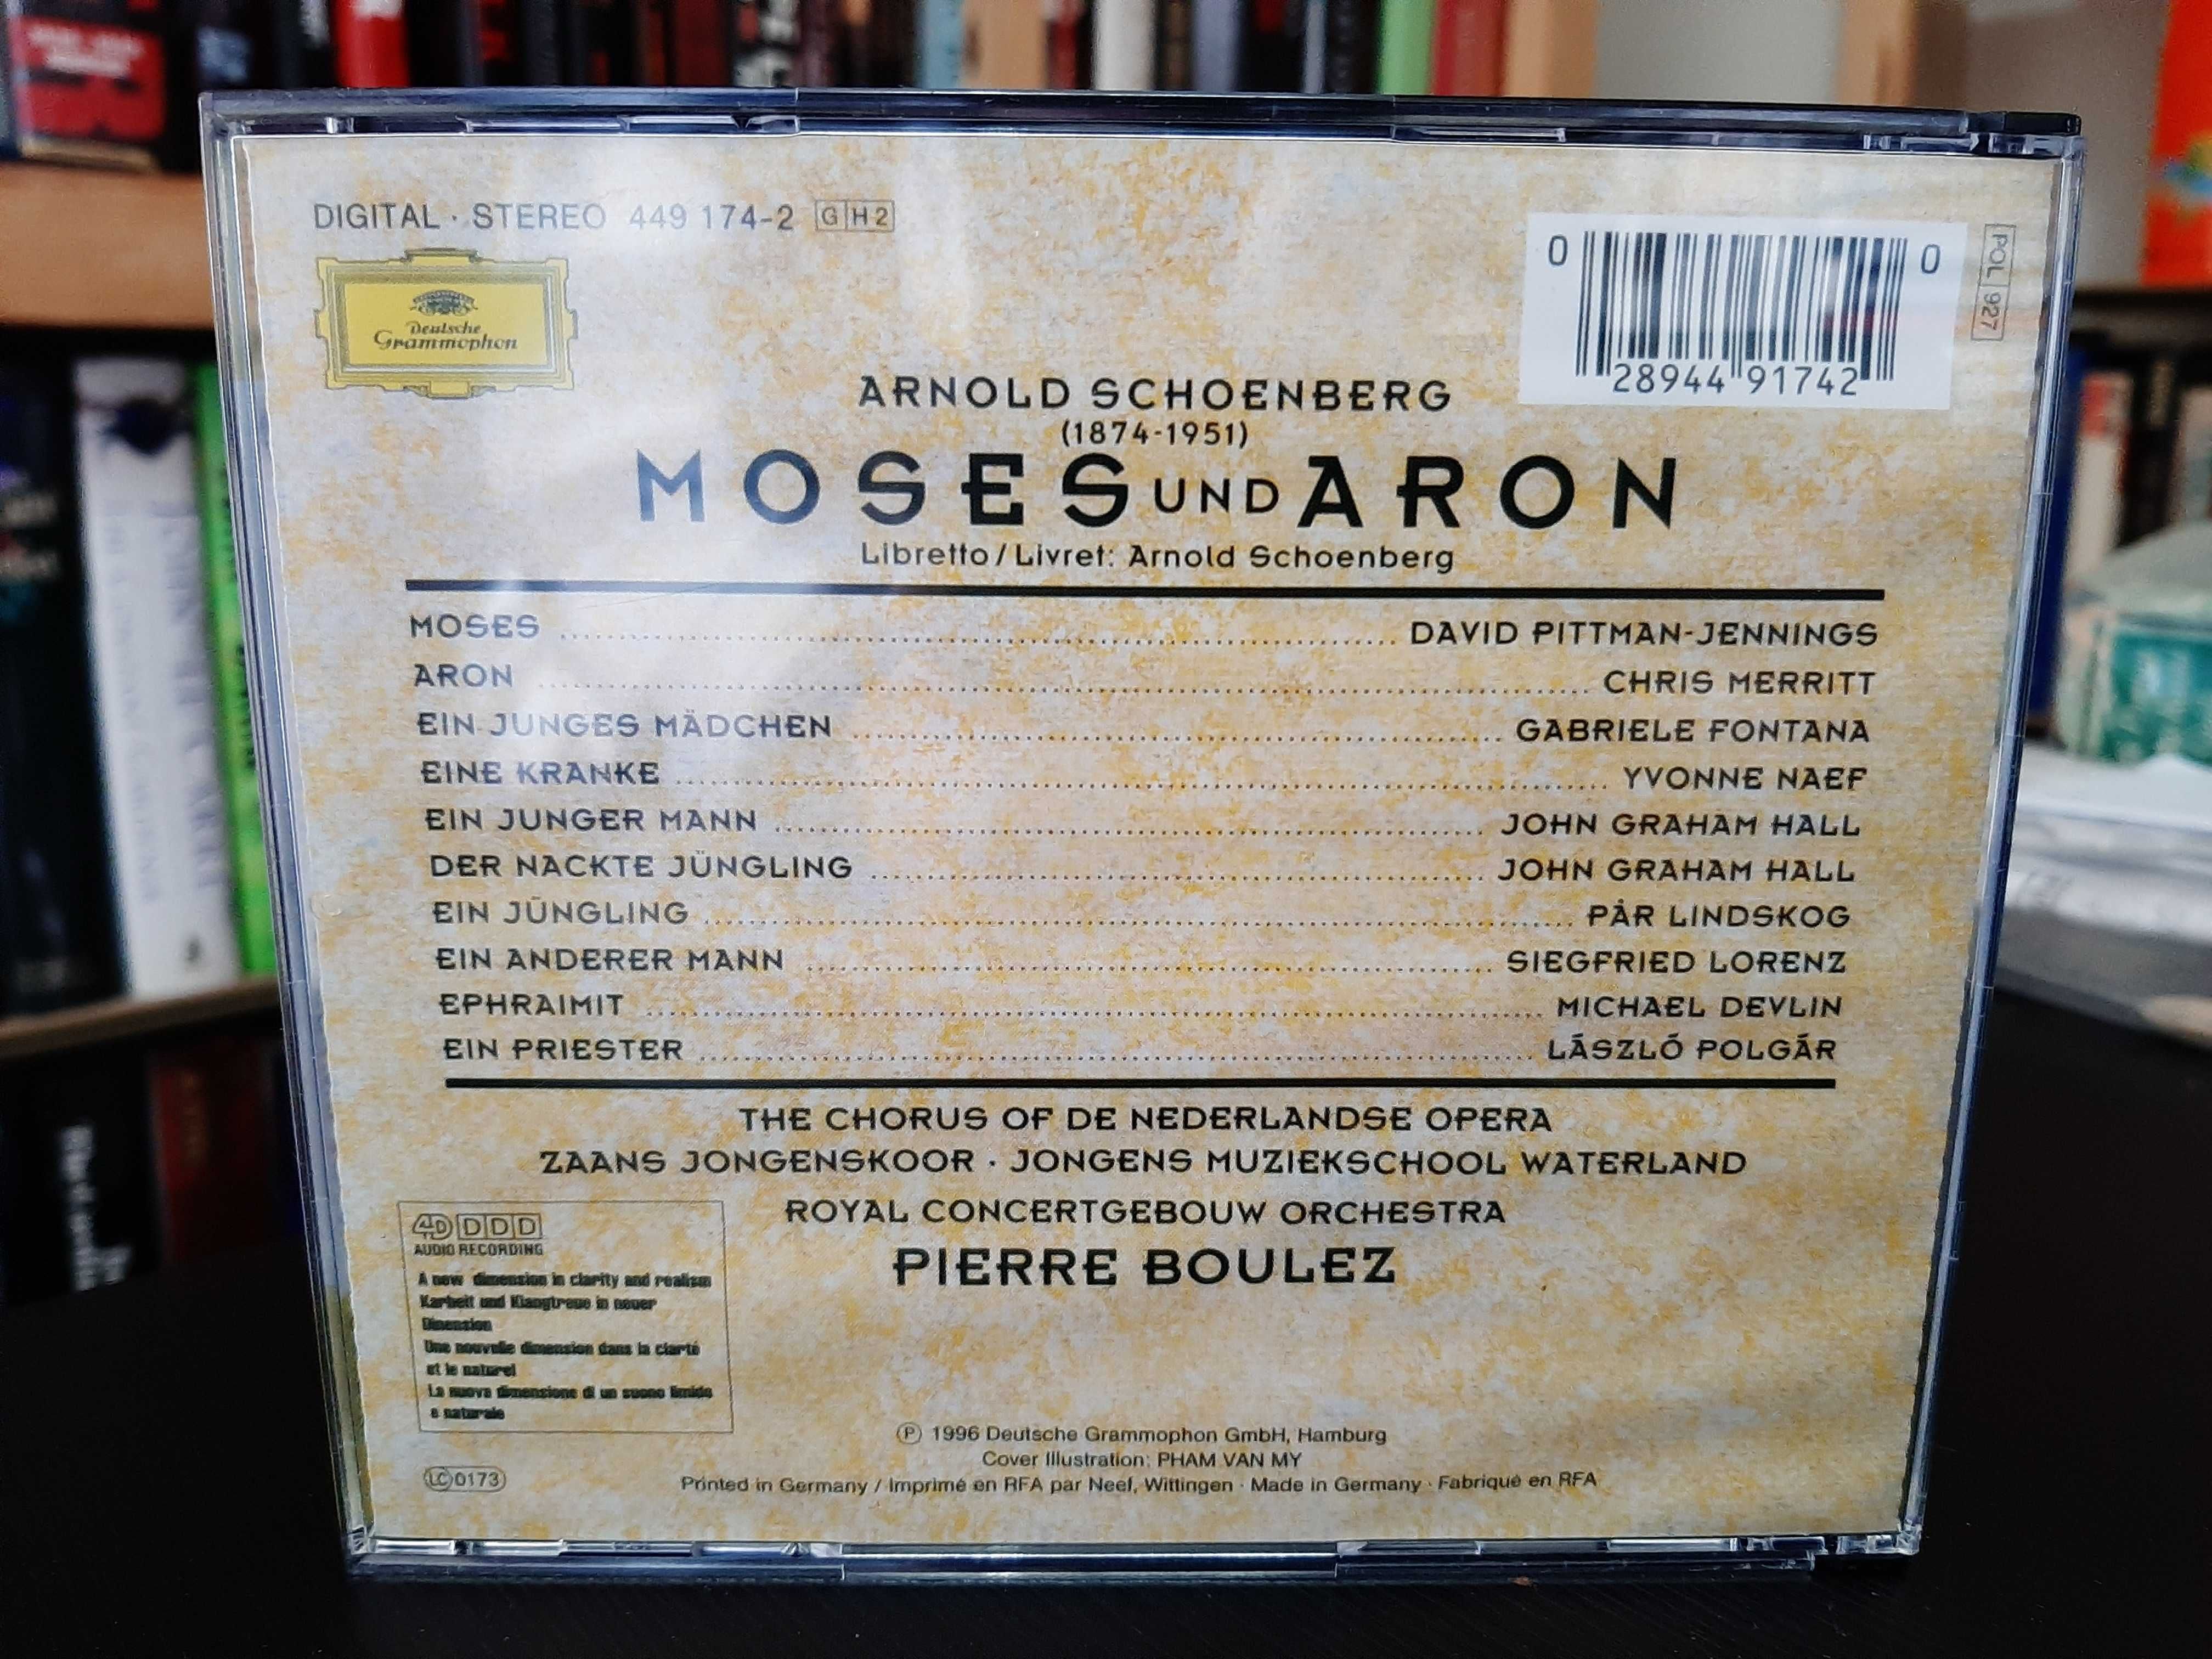 Schoenberg – Moses Und Aron – Concertgebouw Orchestra, Pierre Boulez